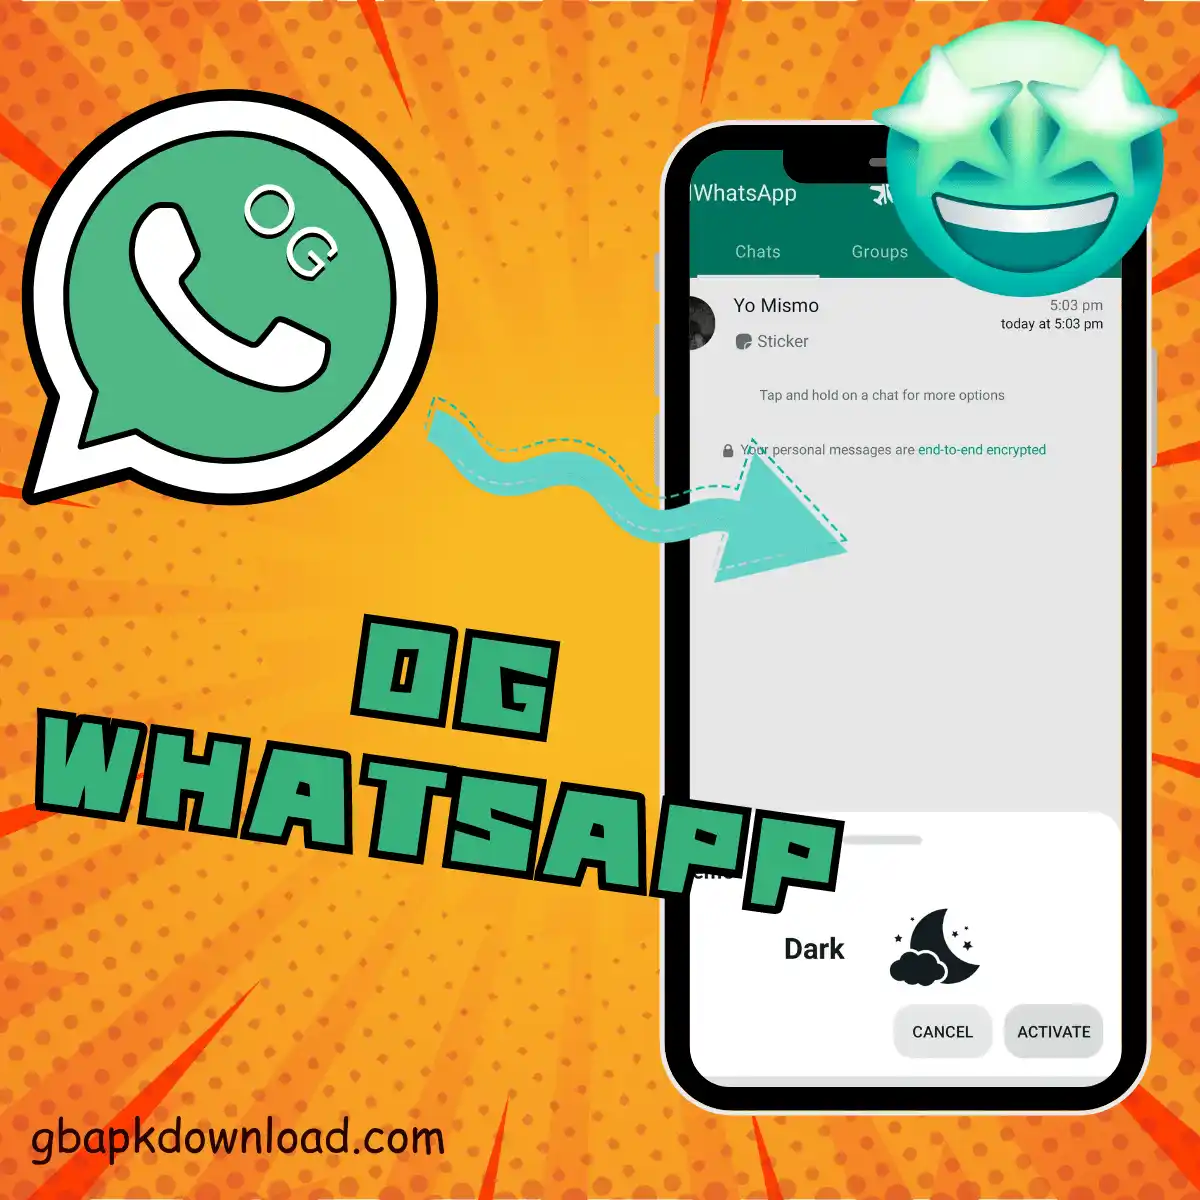 OG WhatsApp one of the GB WhatsApp alternatives